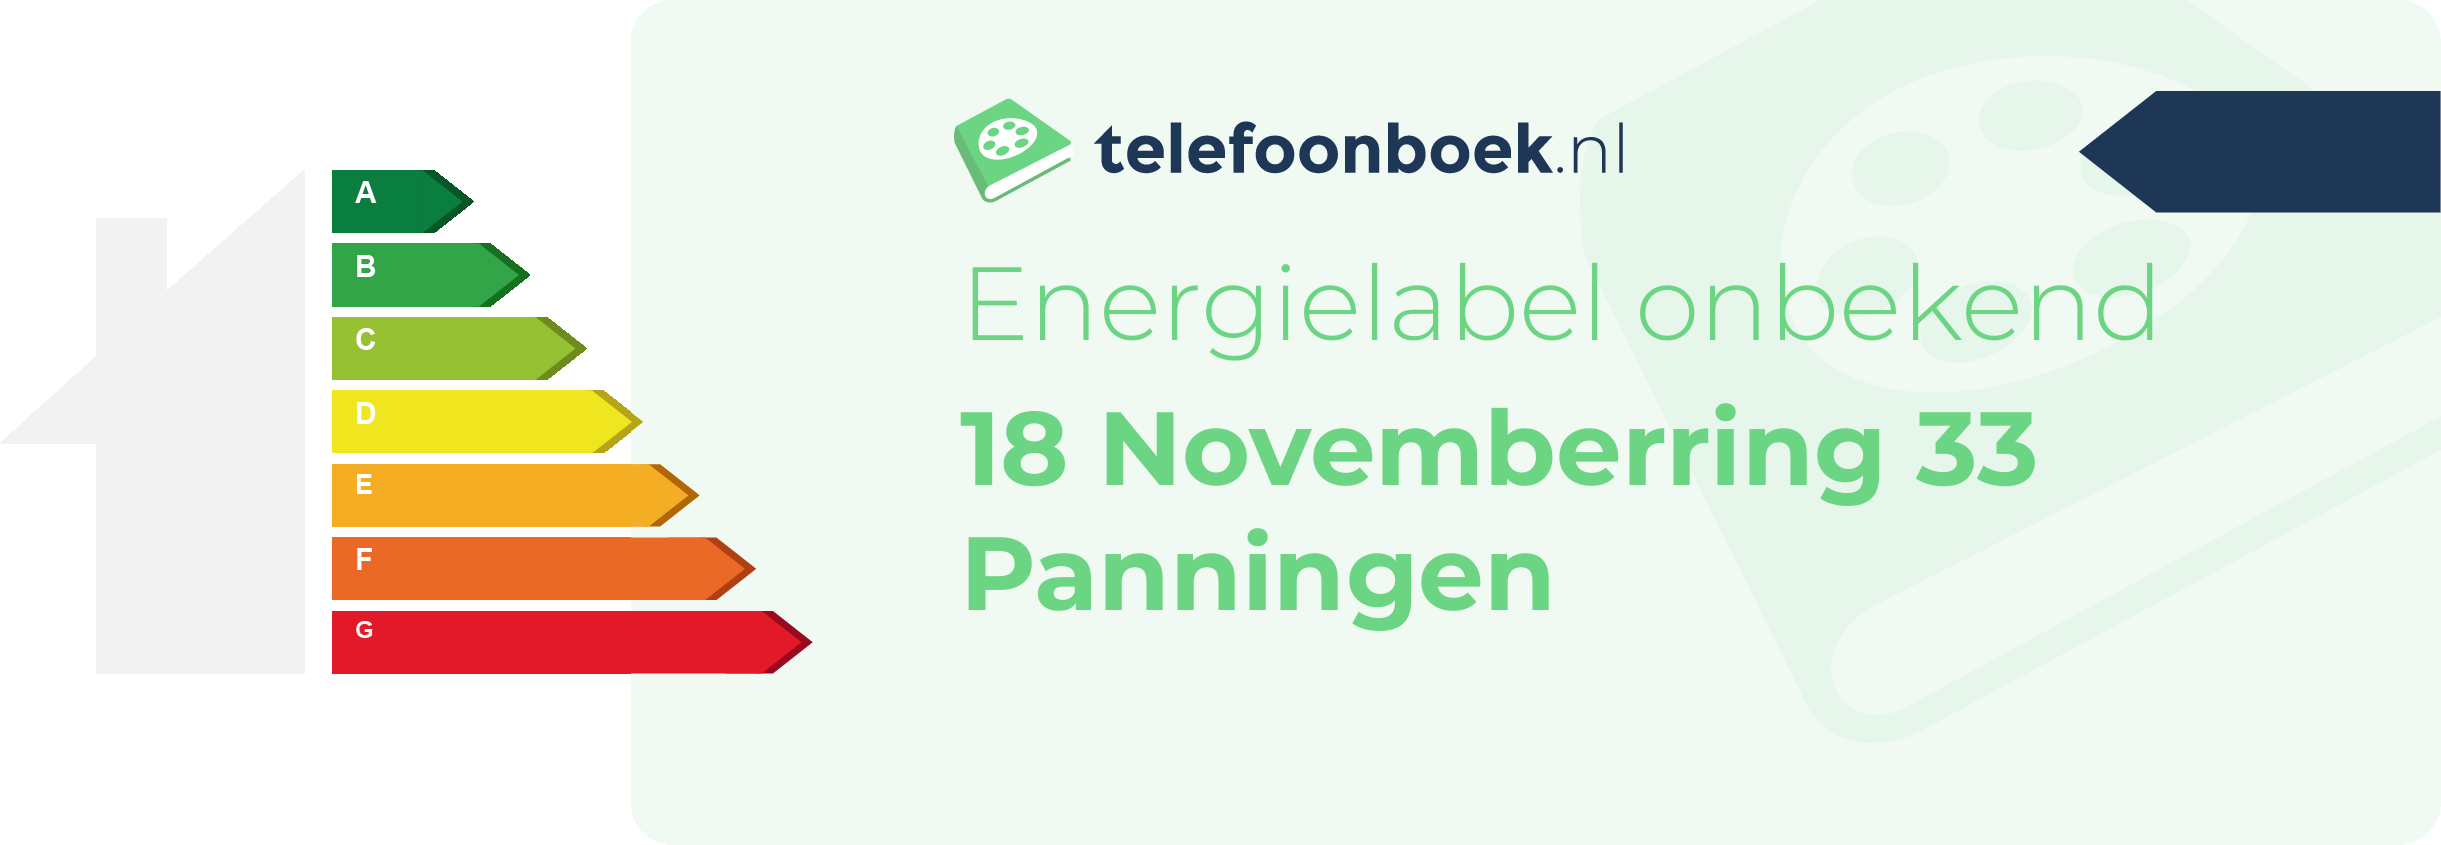 Energielabel 18 Novemberring 33 Panningen